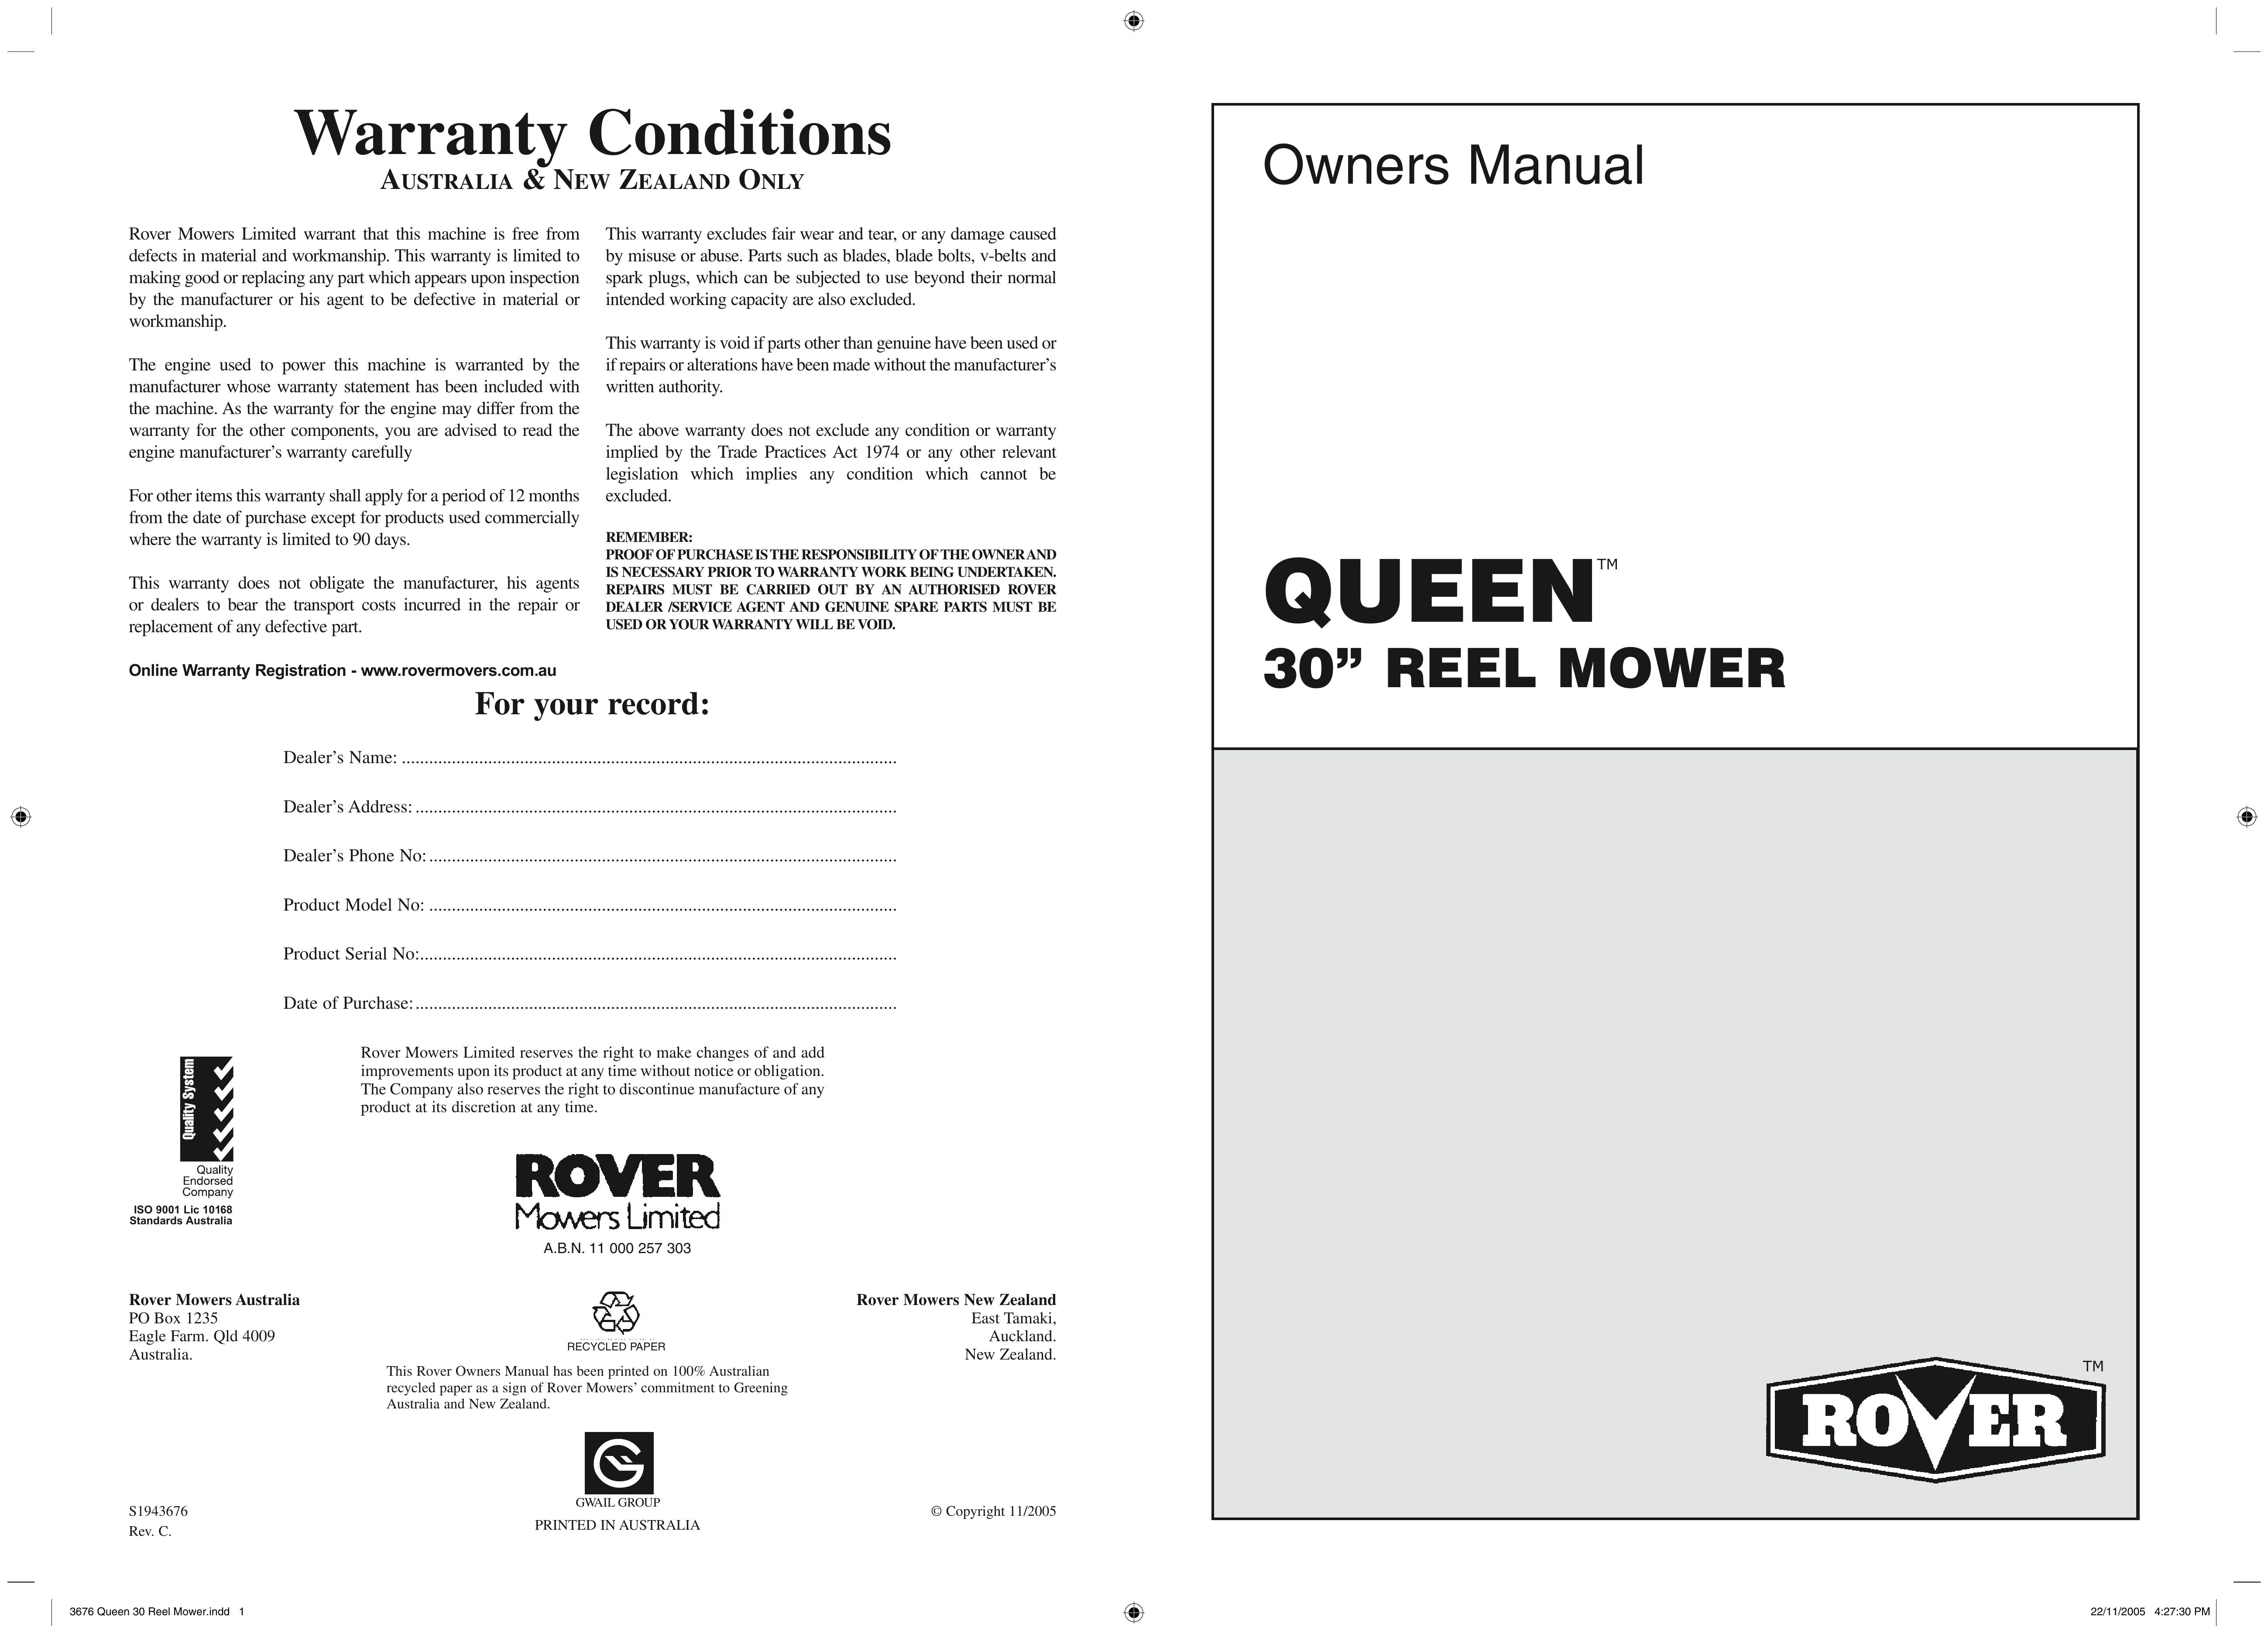 Rover 300361 Lawn Mower User Manual